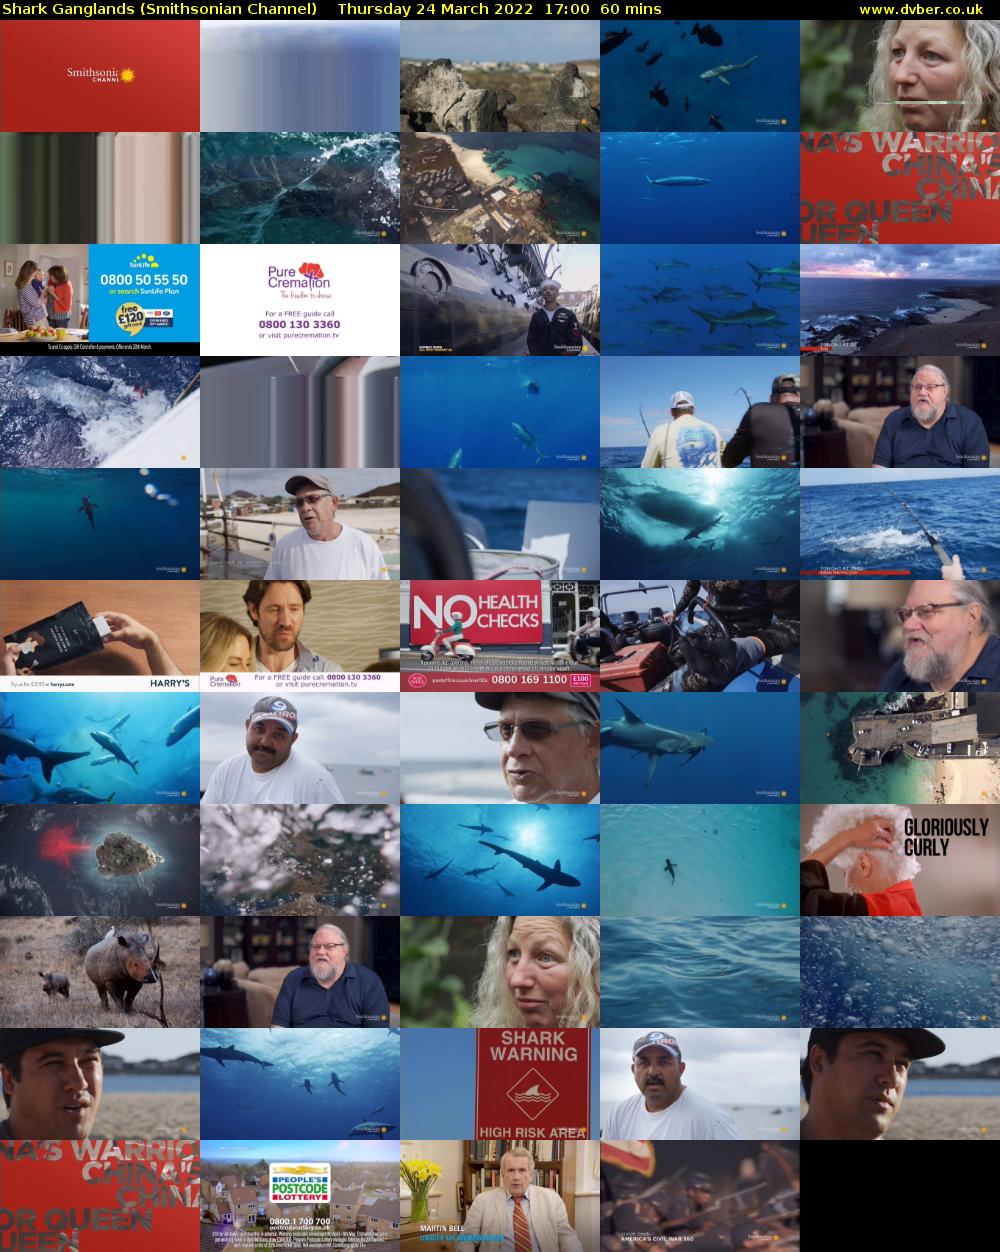 Shark Ganglands (Smithsonian Channel) Thursday 24 March 2022 17:00 - 18:00